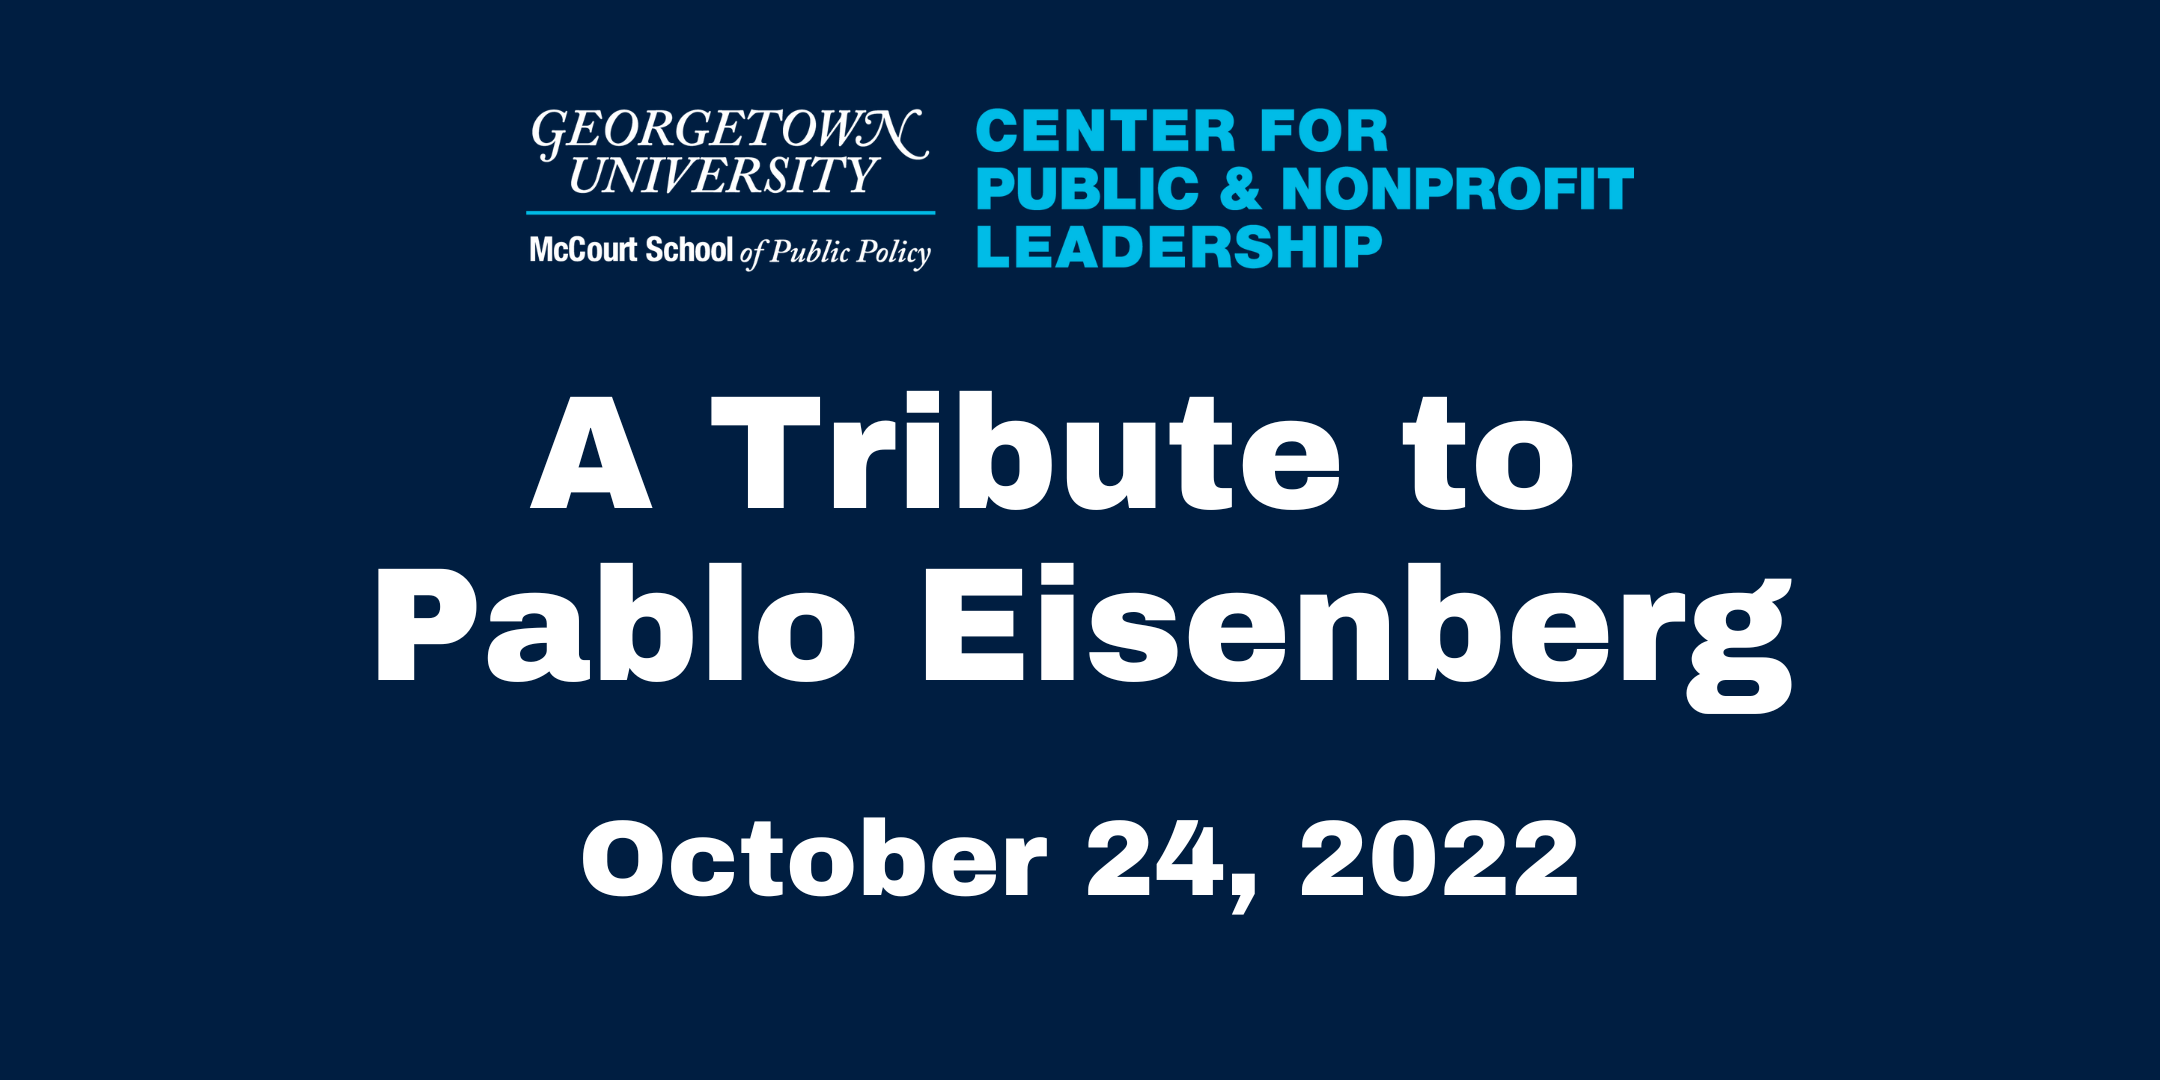 A Tribute to Pablo Eisenberg